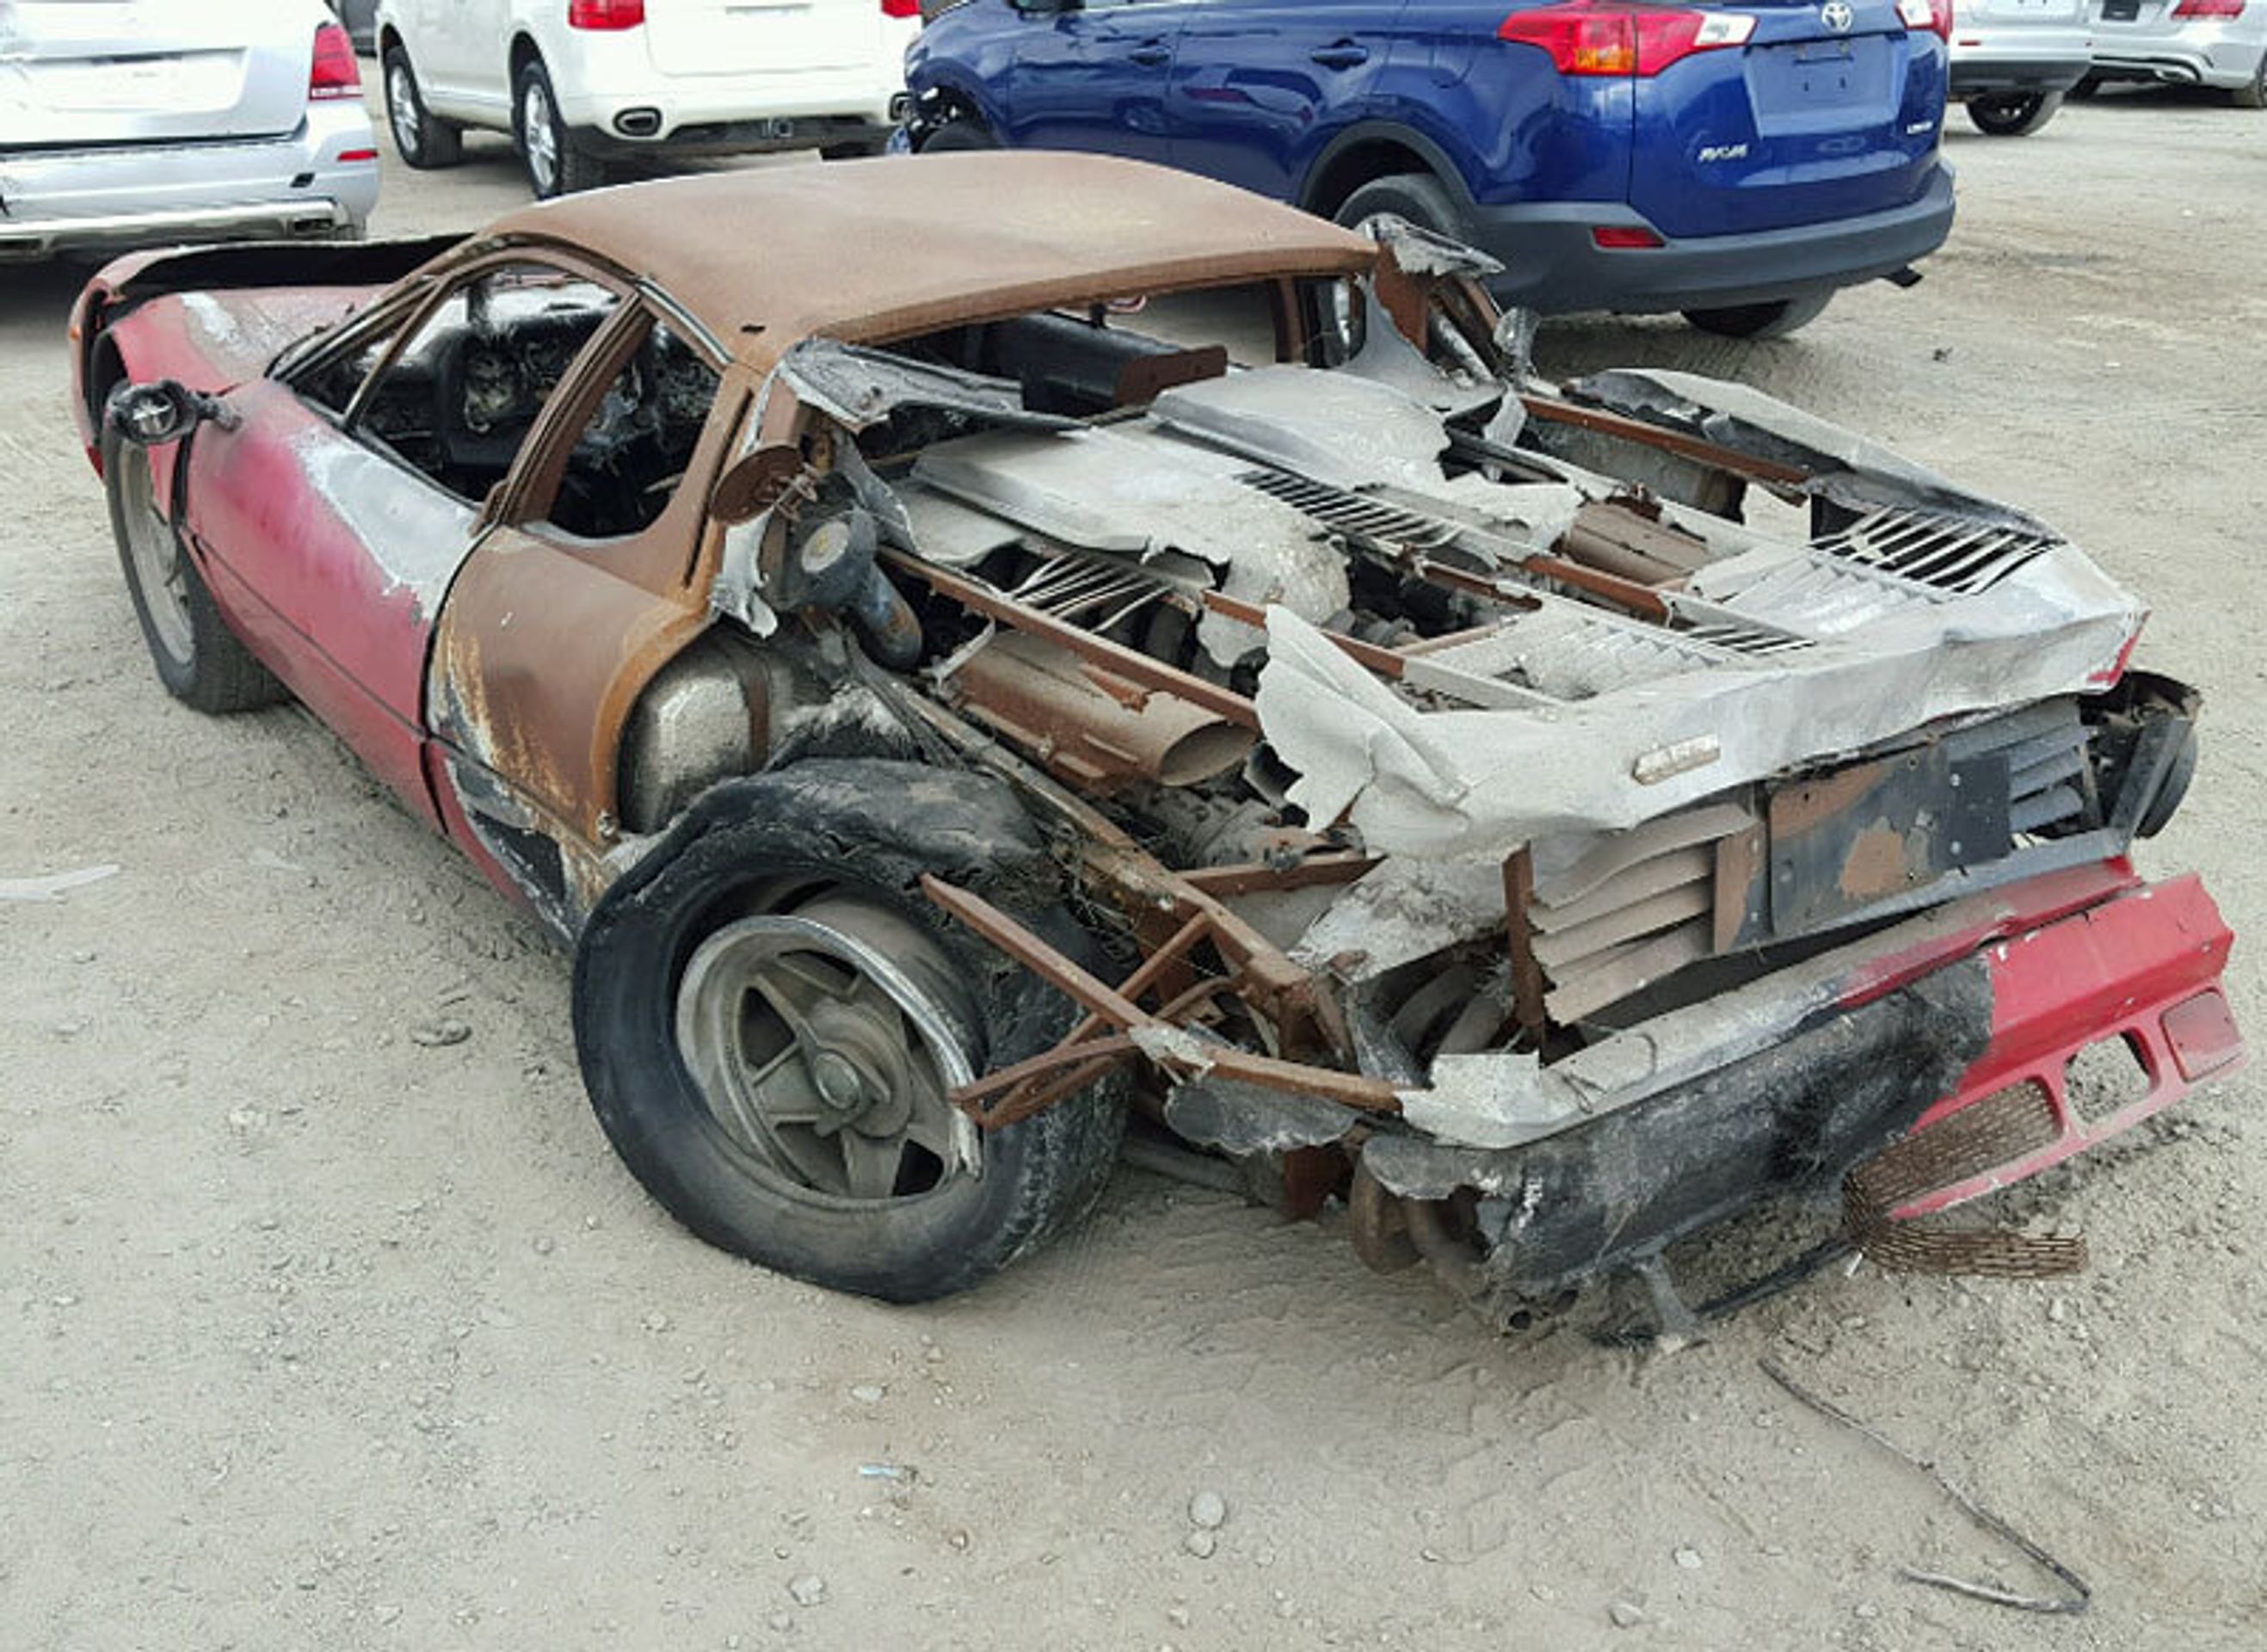 Ferrari - 16 - FOTOGALERIE: Torzo ohořelého Ferrari 512 bylo vydraženo (5/10)